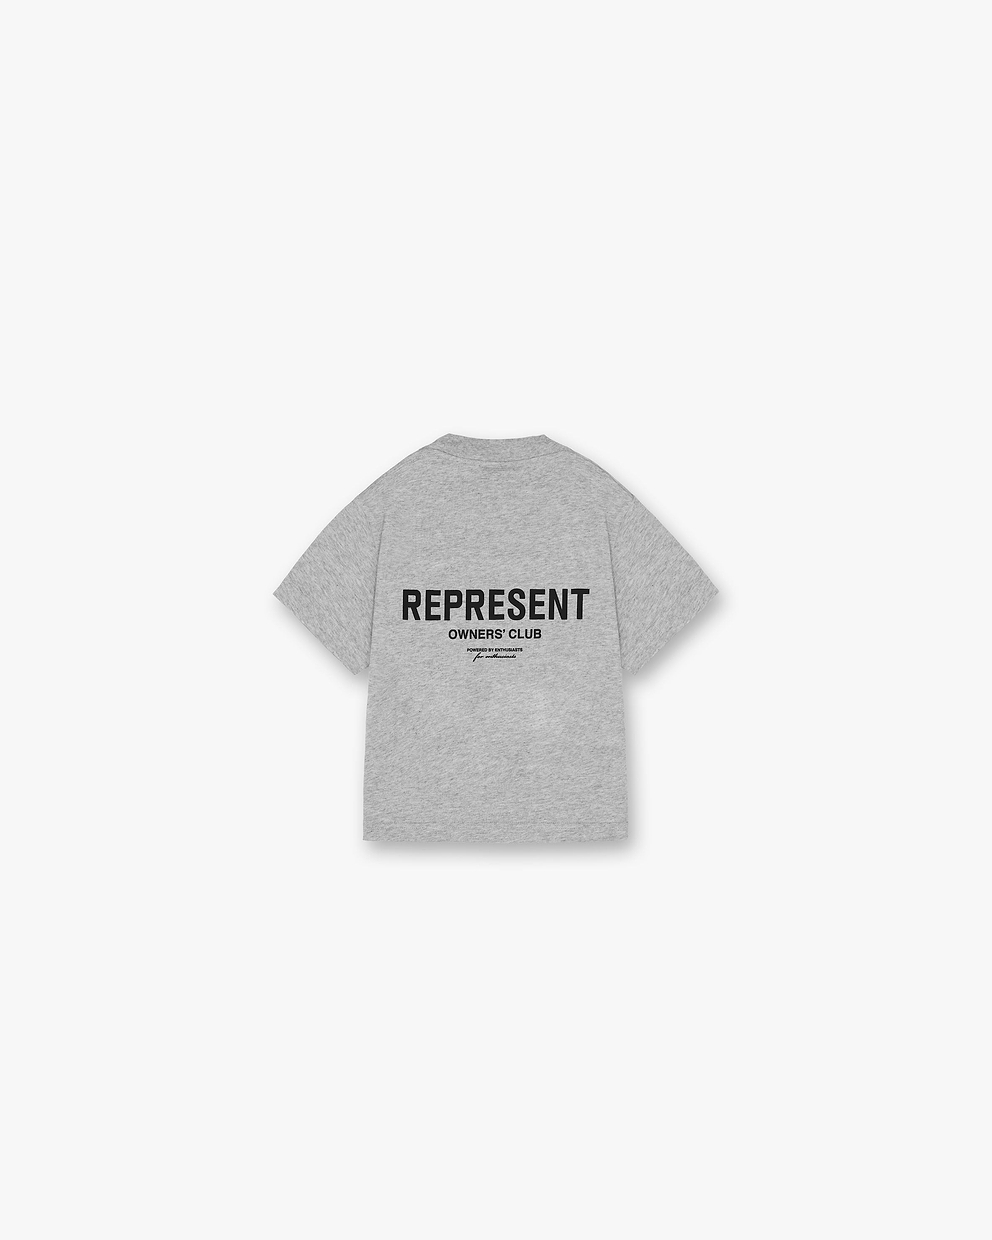 Represent Mini Owners Club T-Shirt - Ash Grey